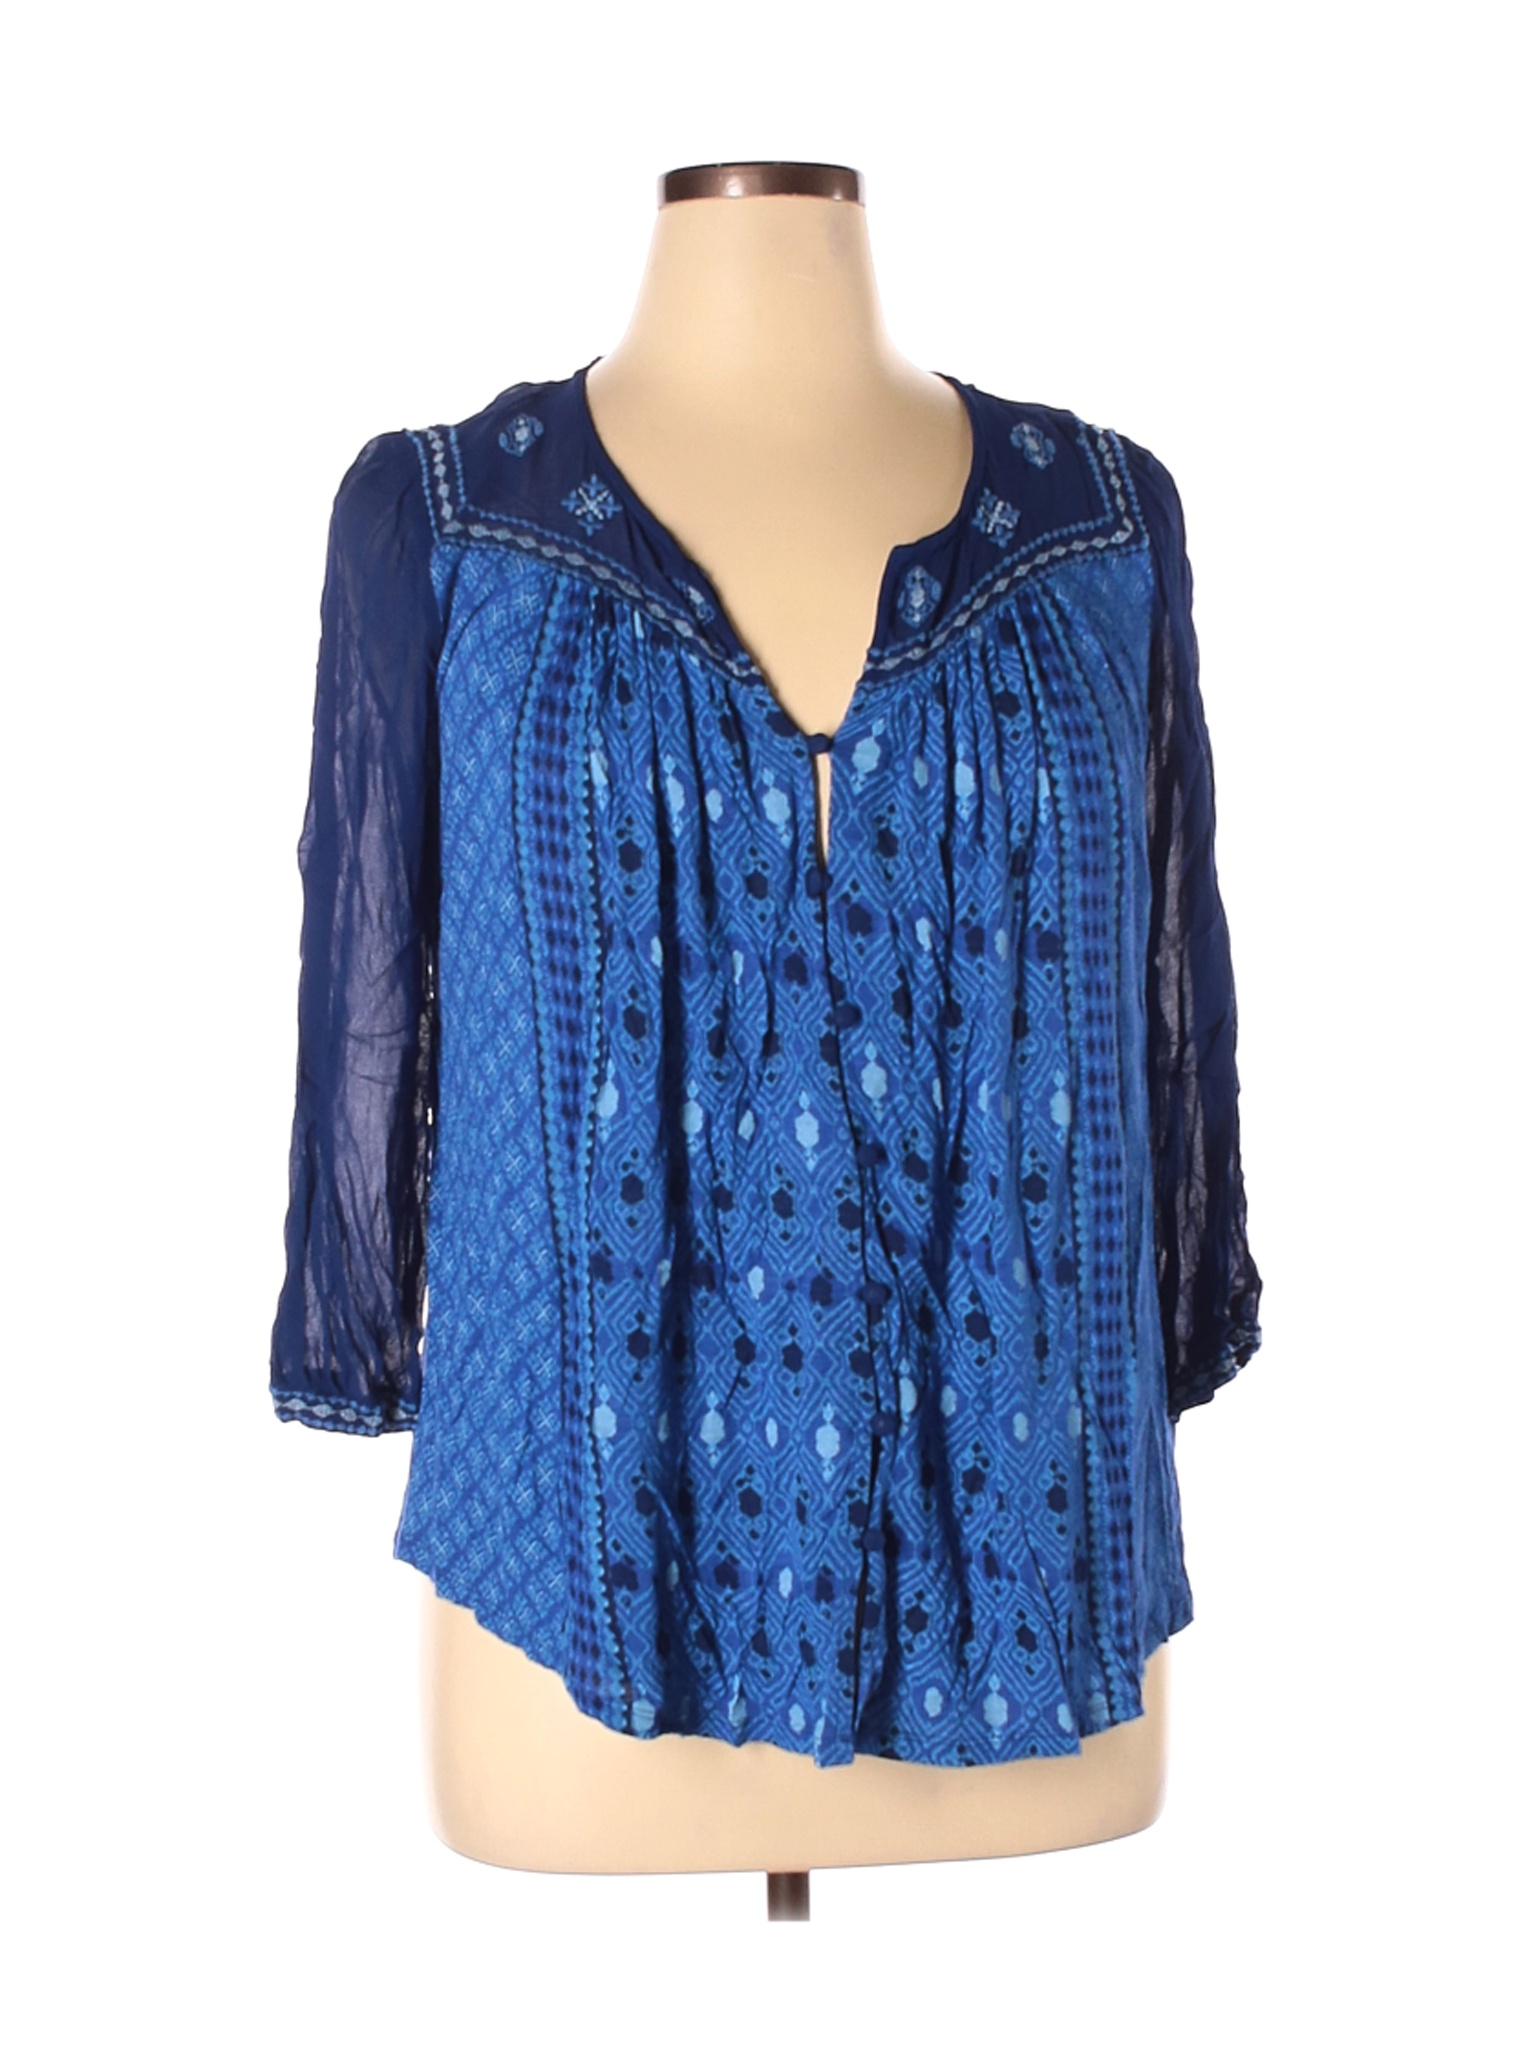 Lucky Brand Women Blue Long Sleeve Top 1X Plus | eBay